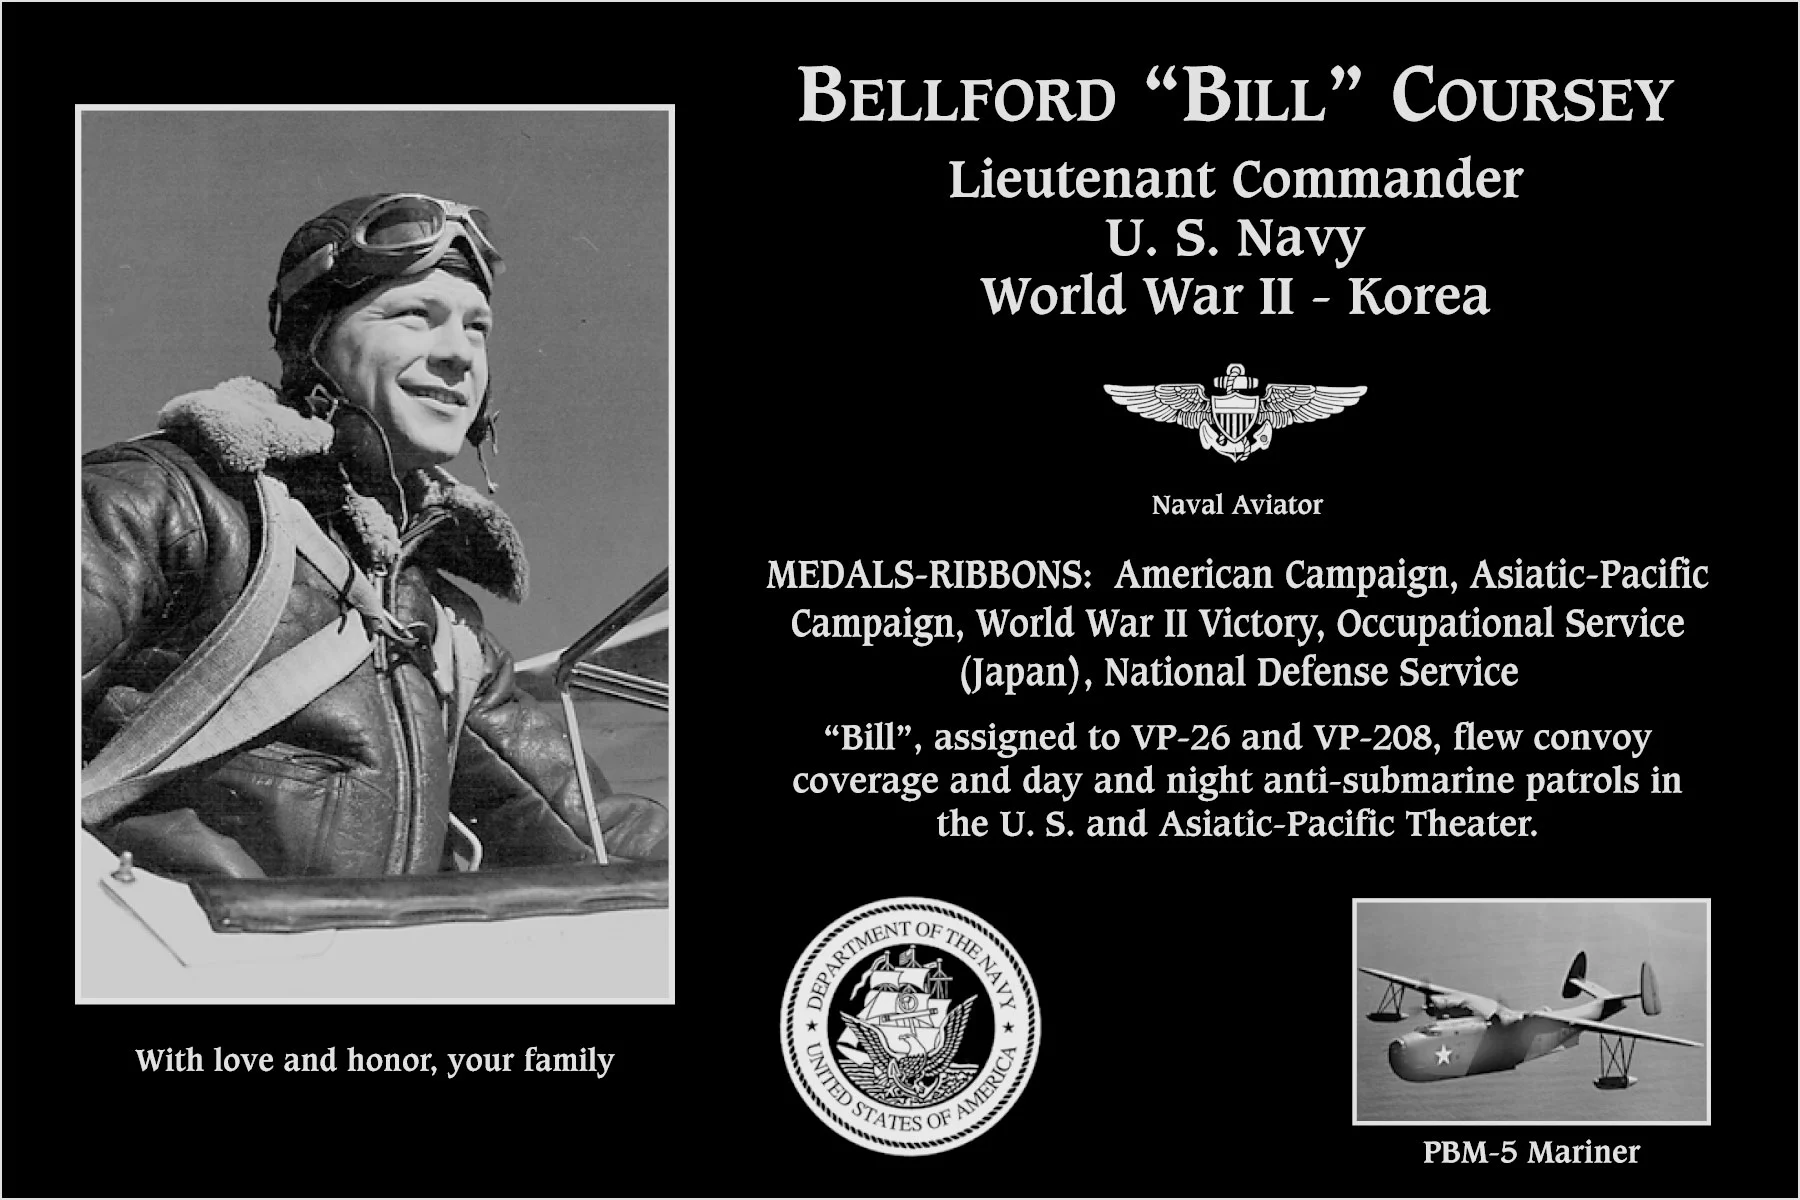 Bellford “Bill” Coursey